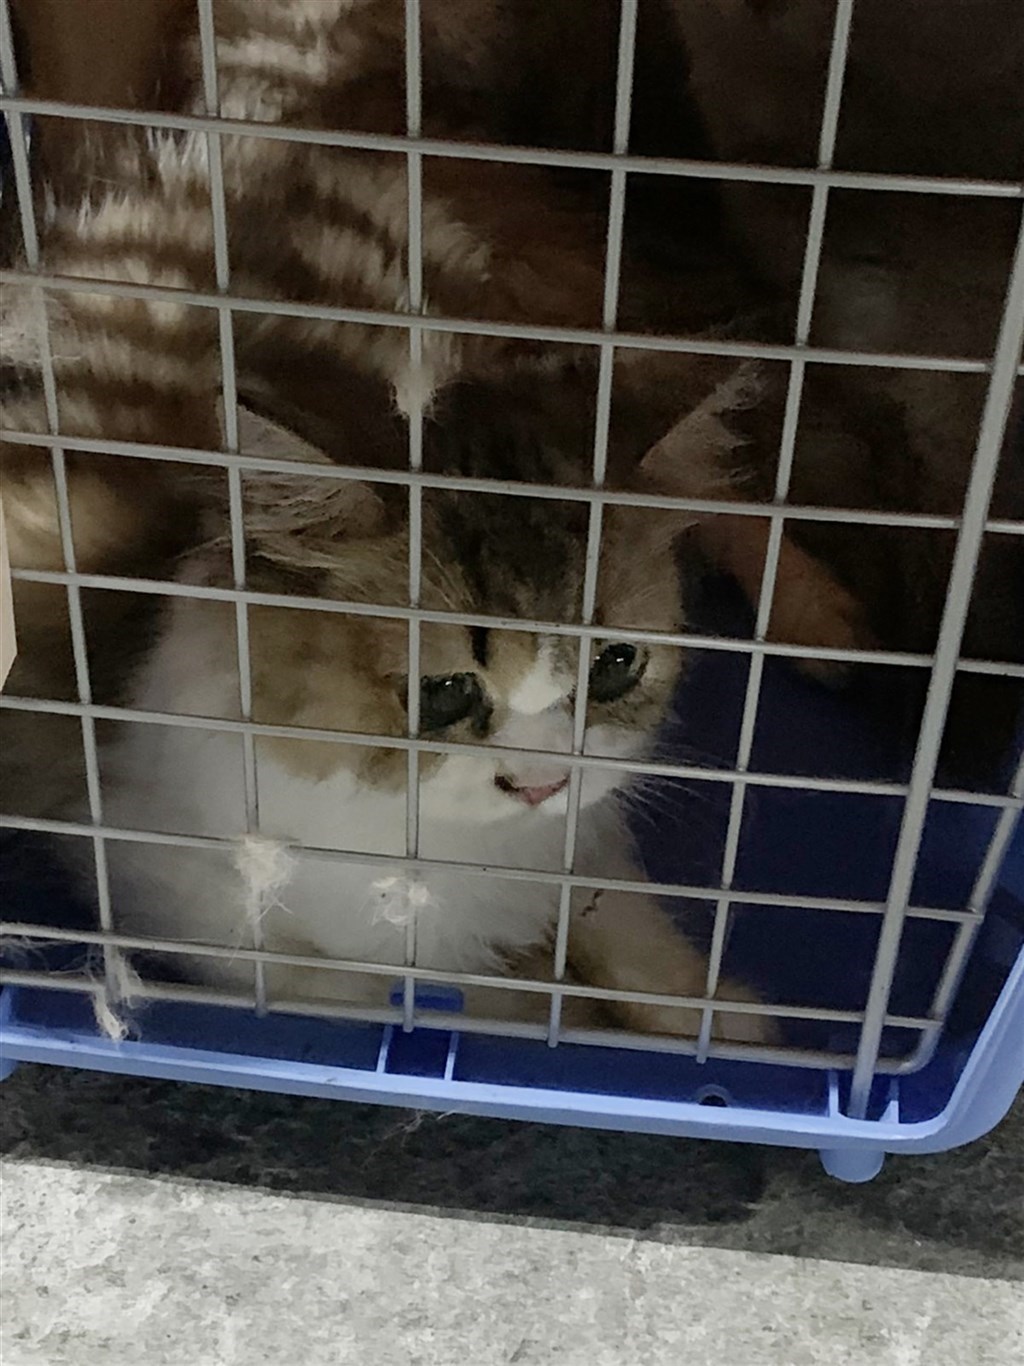 Taiwan authorities euthanize 154 smuggled pet cats